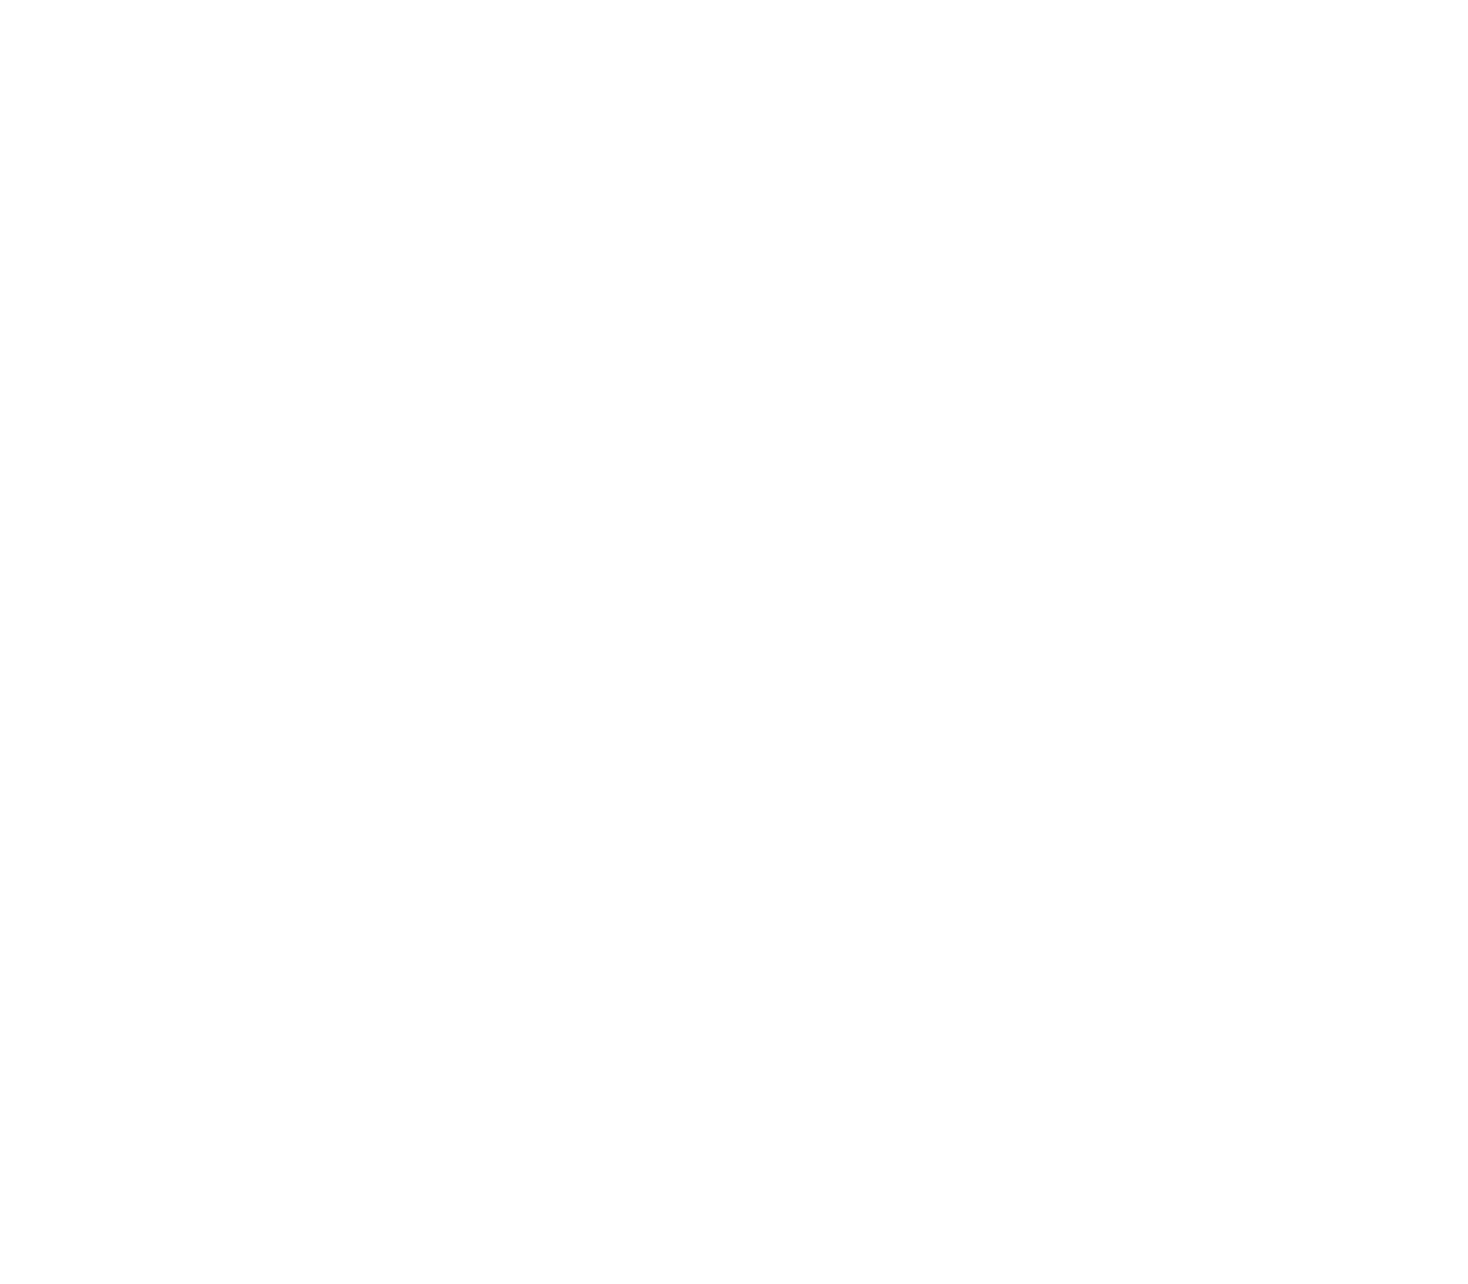 Corvius